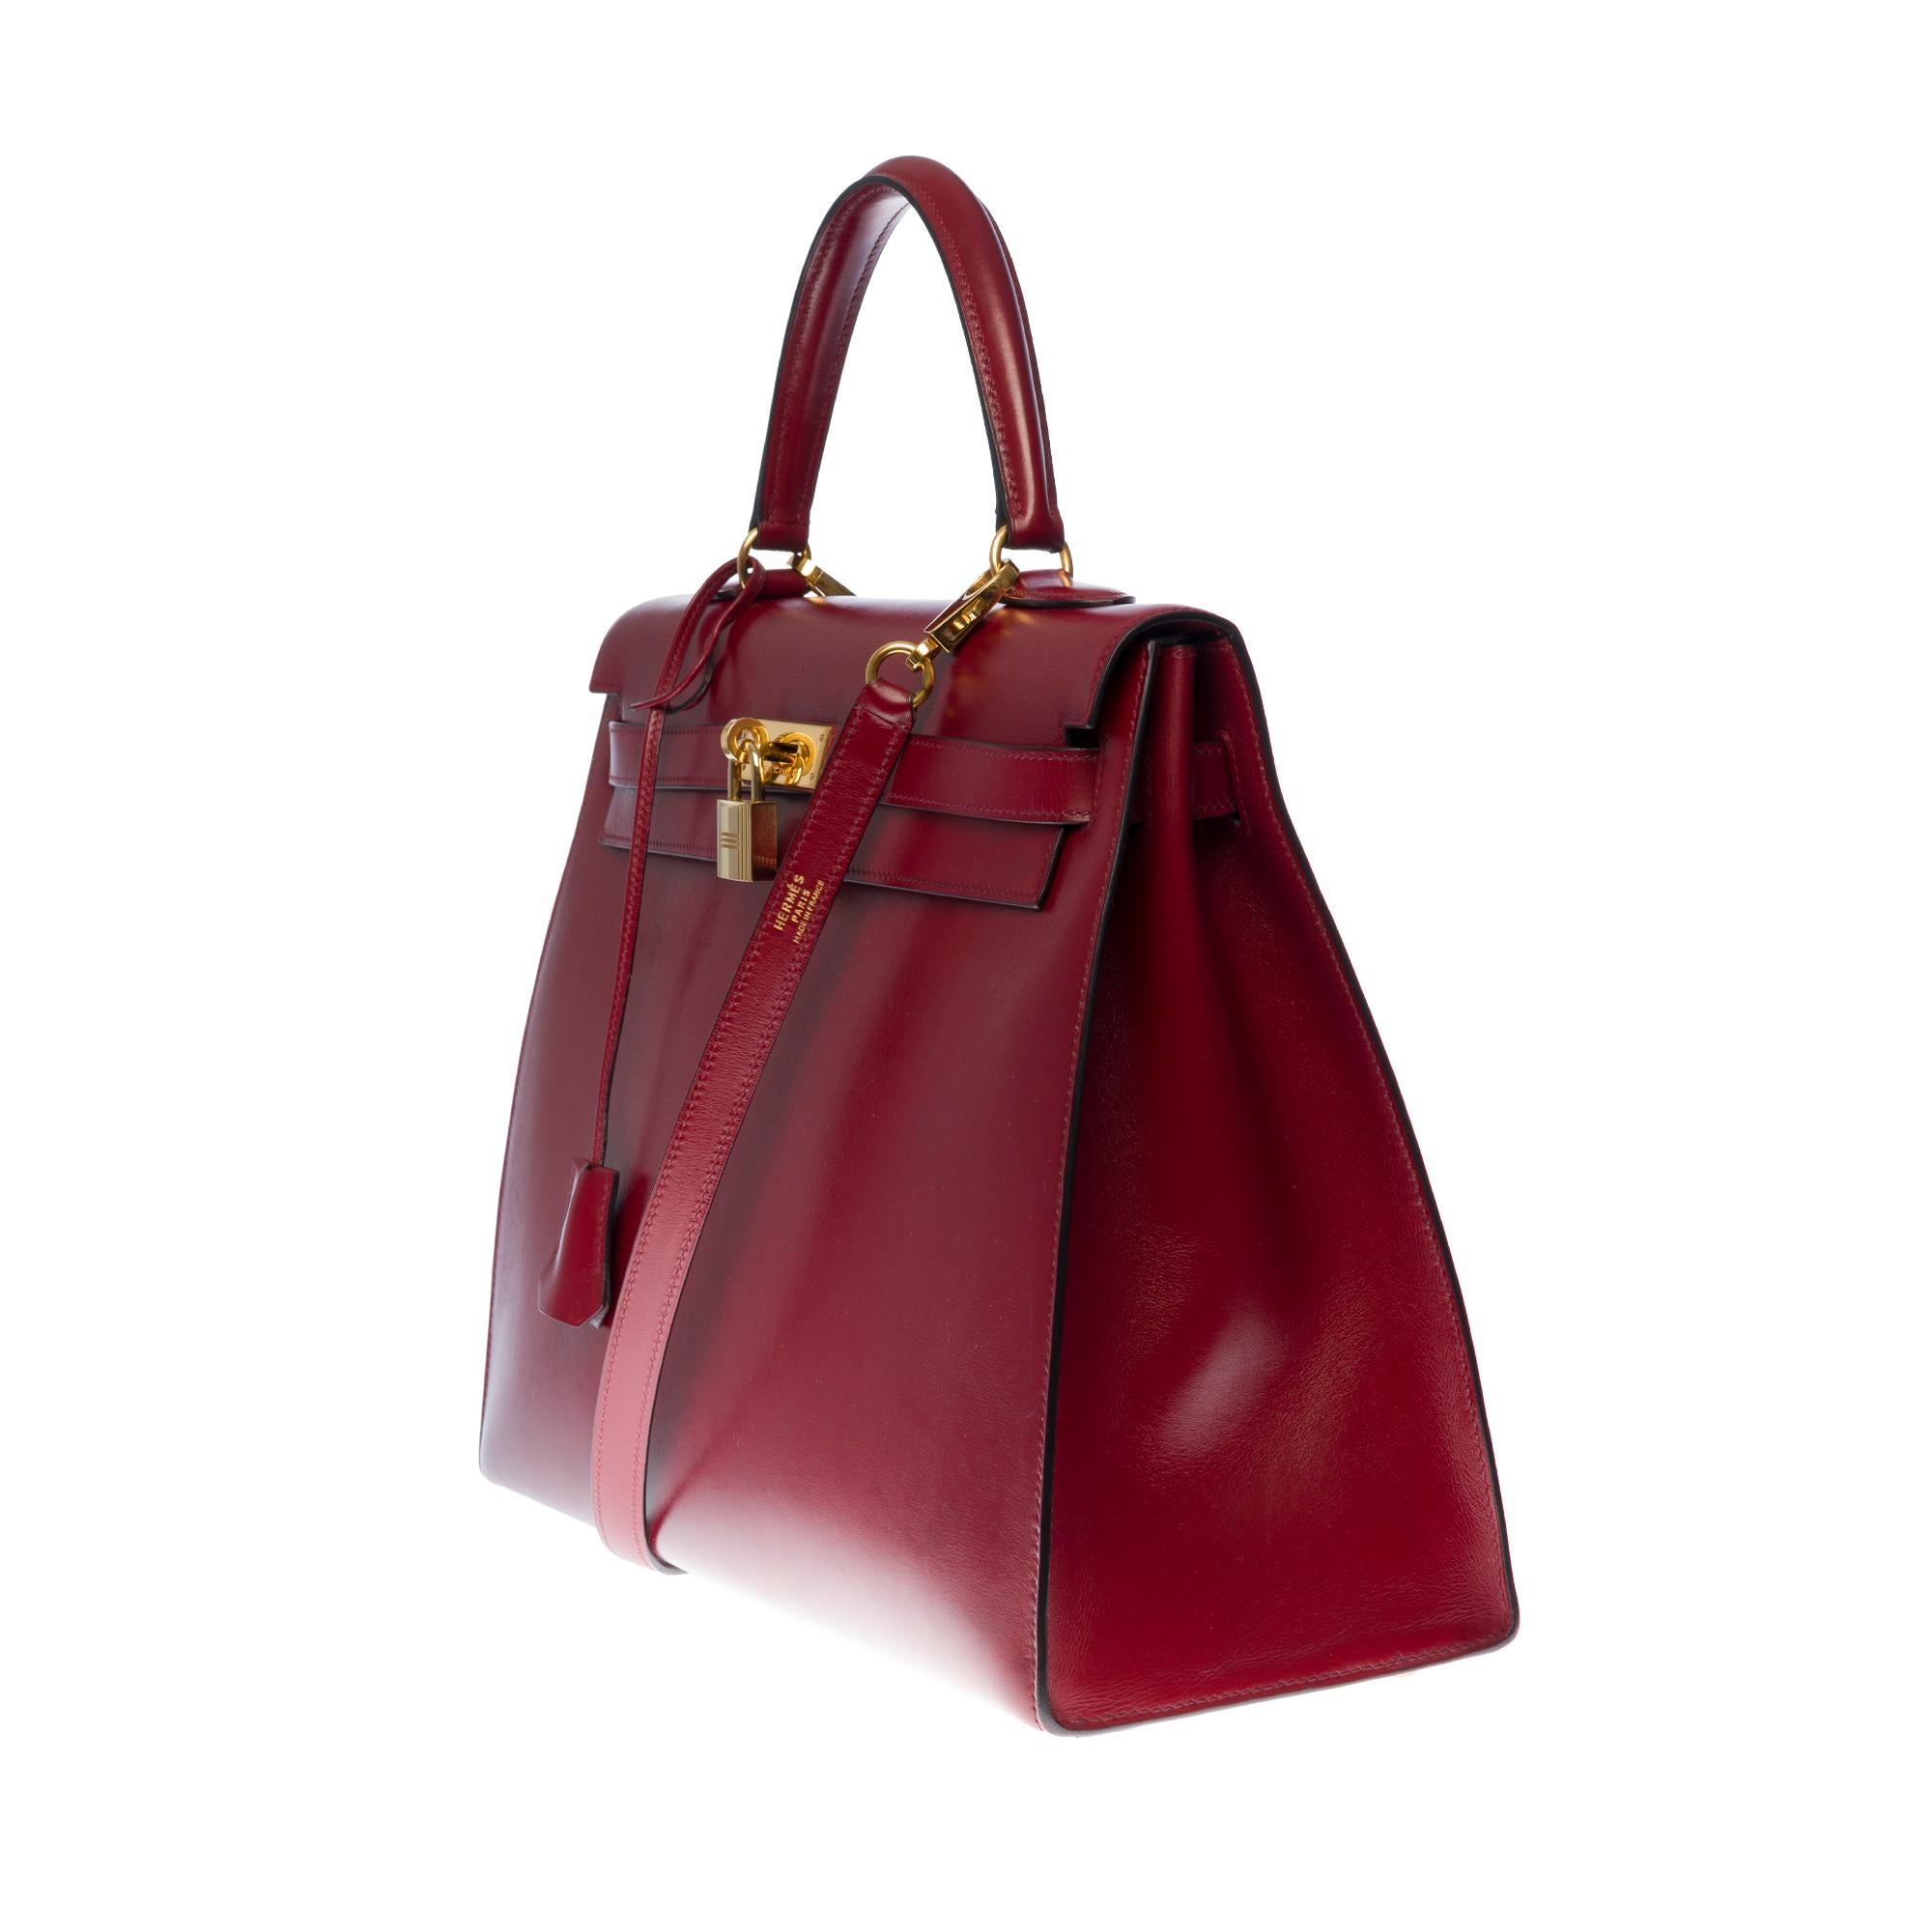 Brown Hermès Kelly 35 sellier strap shoulder bag in burgundy calf leather, GHW